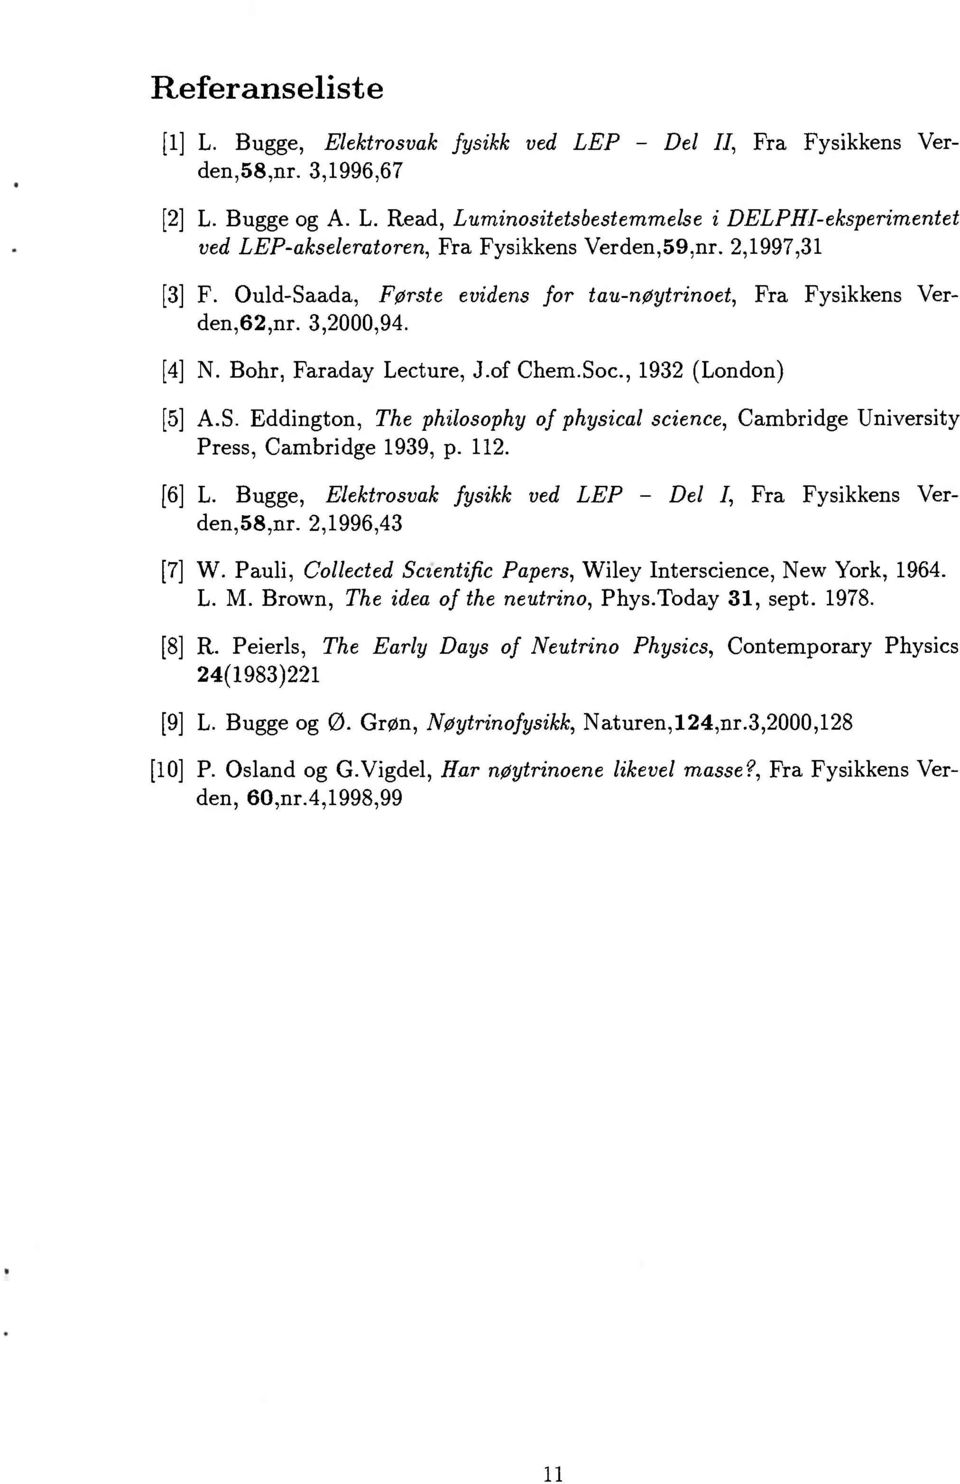 112. [6] L. Bugge, Elektrosvak fysikk ved LEP - Del 7, Fra Fysikkens Verden,58,nr. 2,1996,43 [7] W. Pauli, Collected Scientific Papers, Wiley Interscience, New York, 1964. L. M.